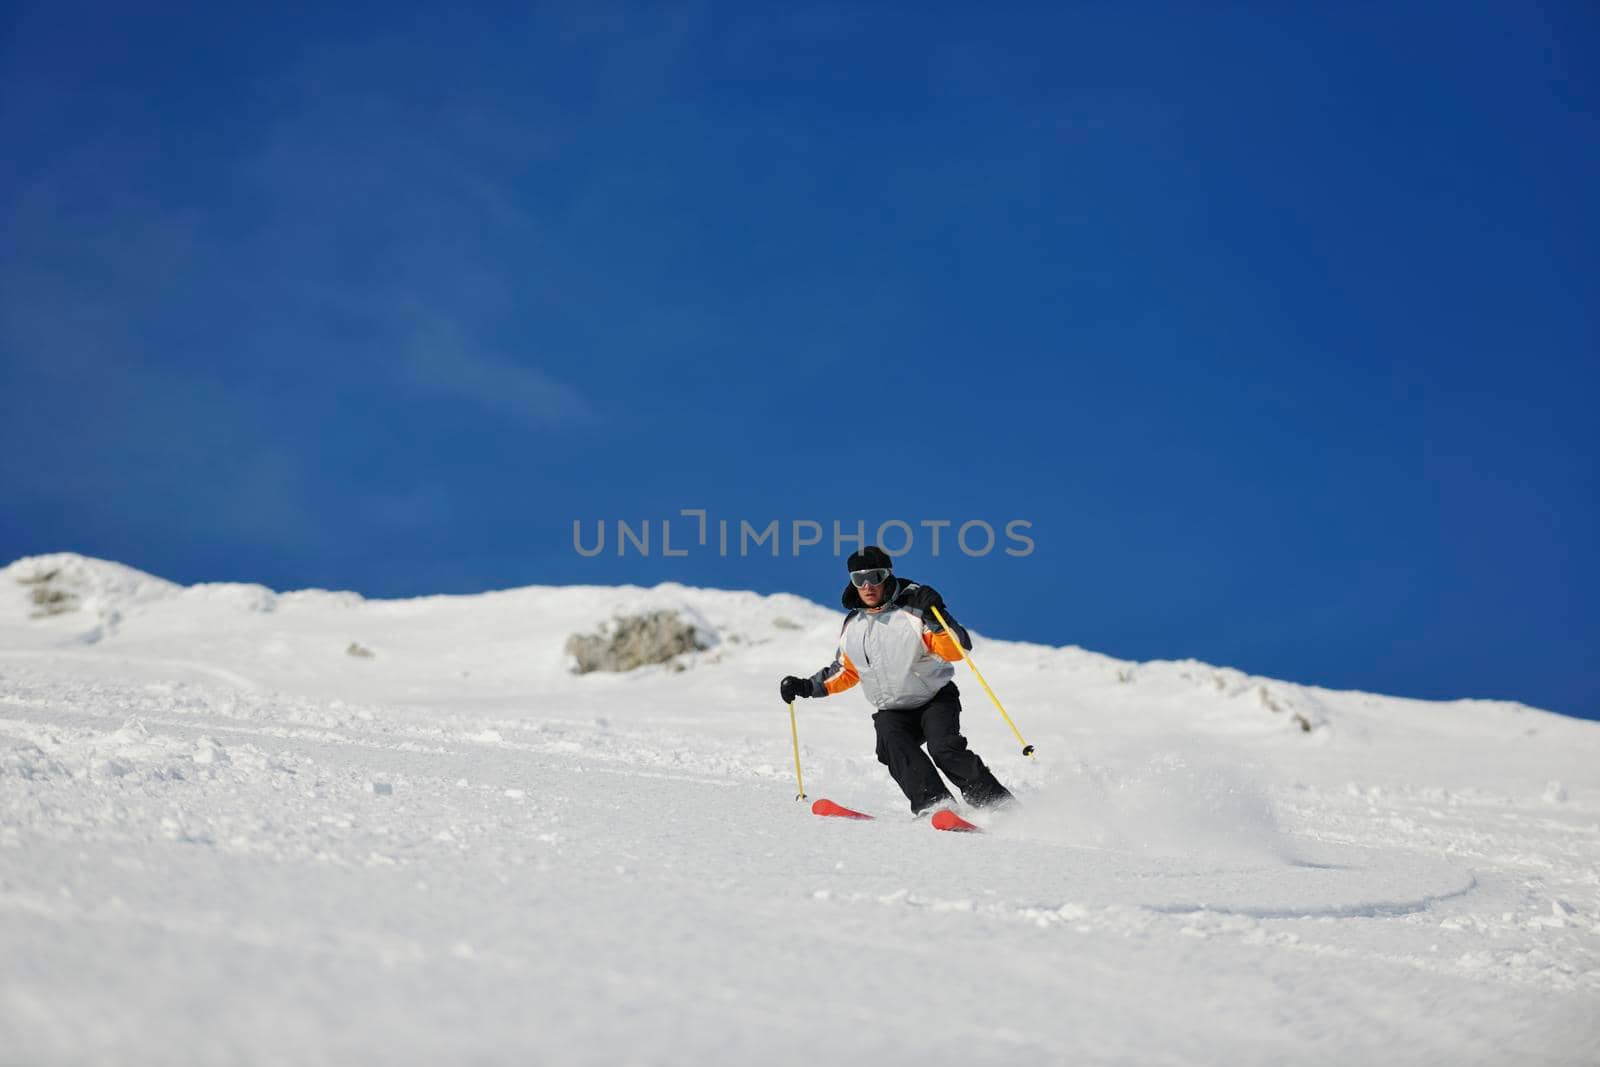 skier free ride  by dotshock